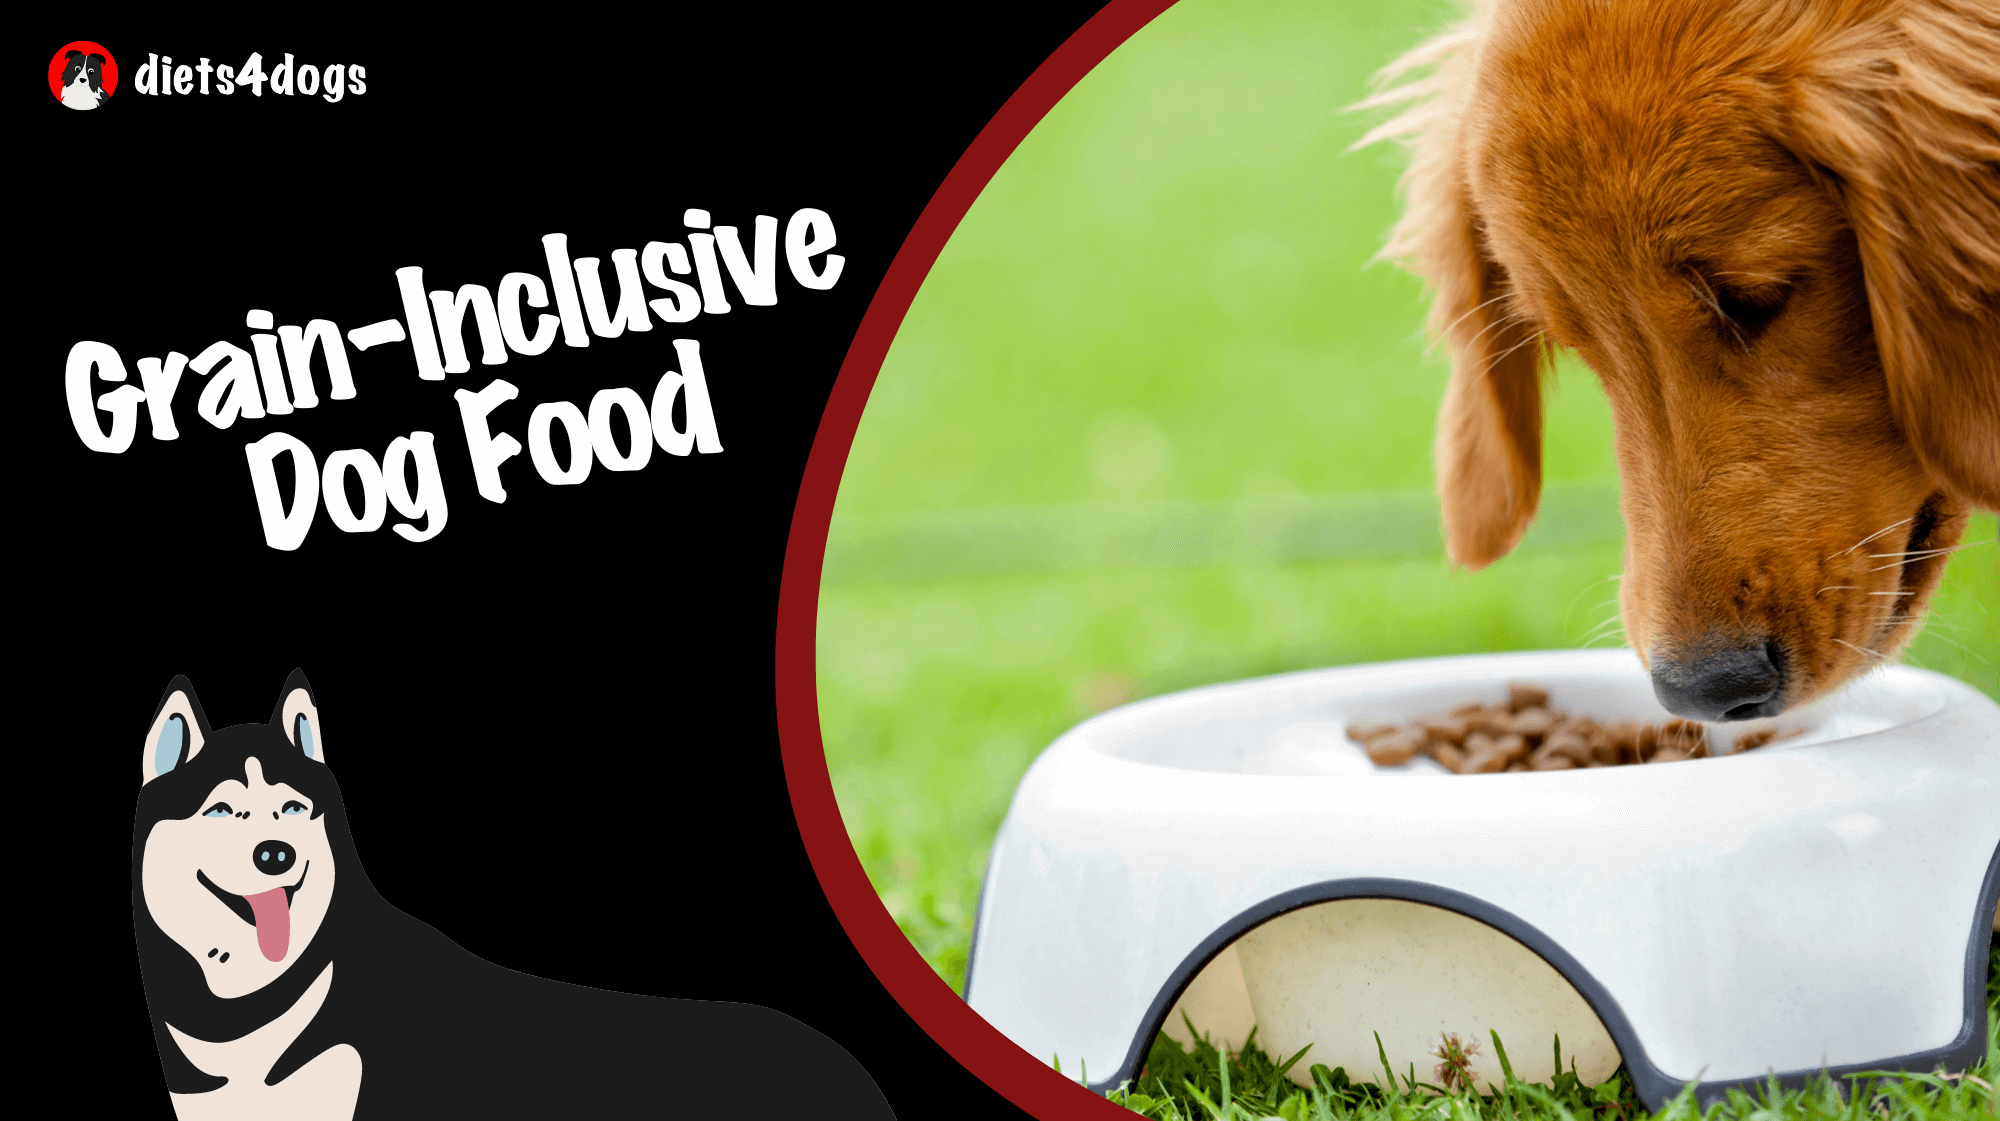 Grain-Inclusive Dog Food